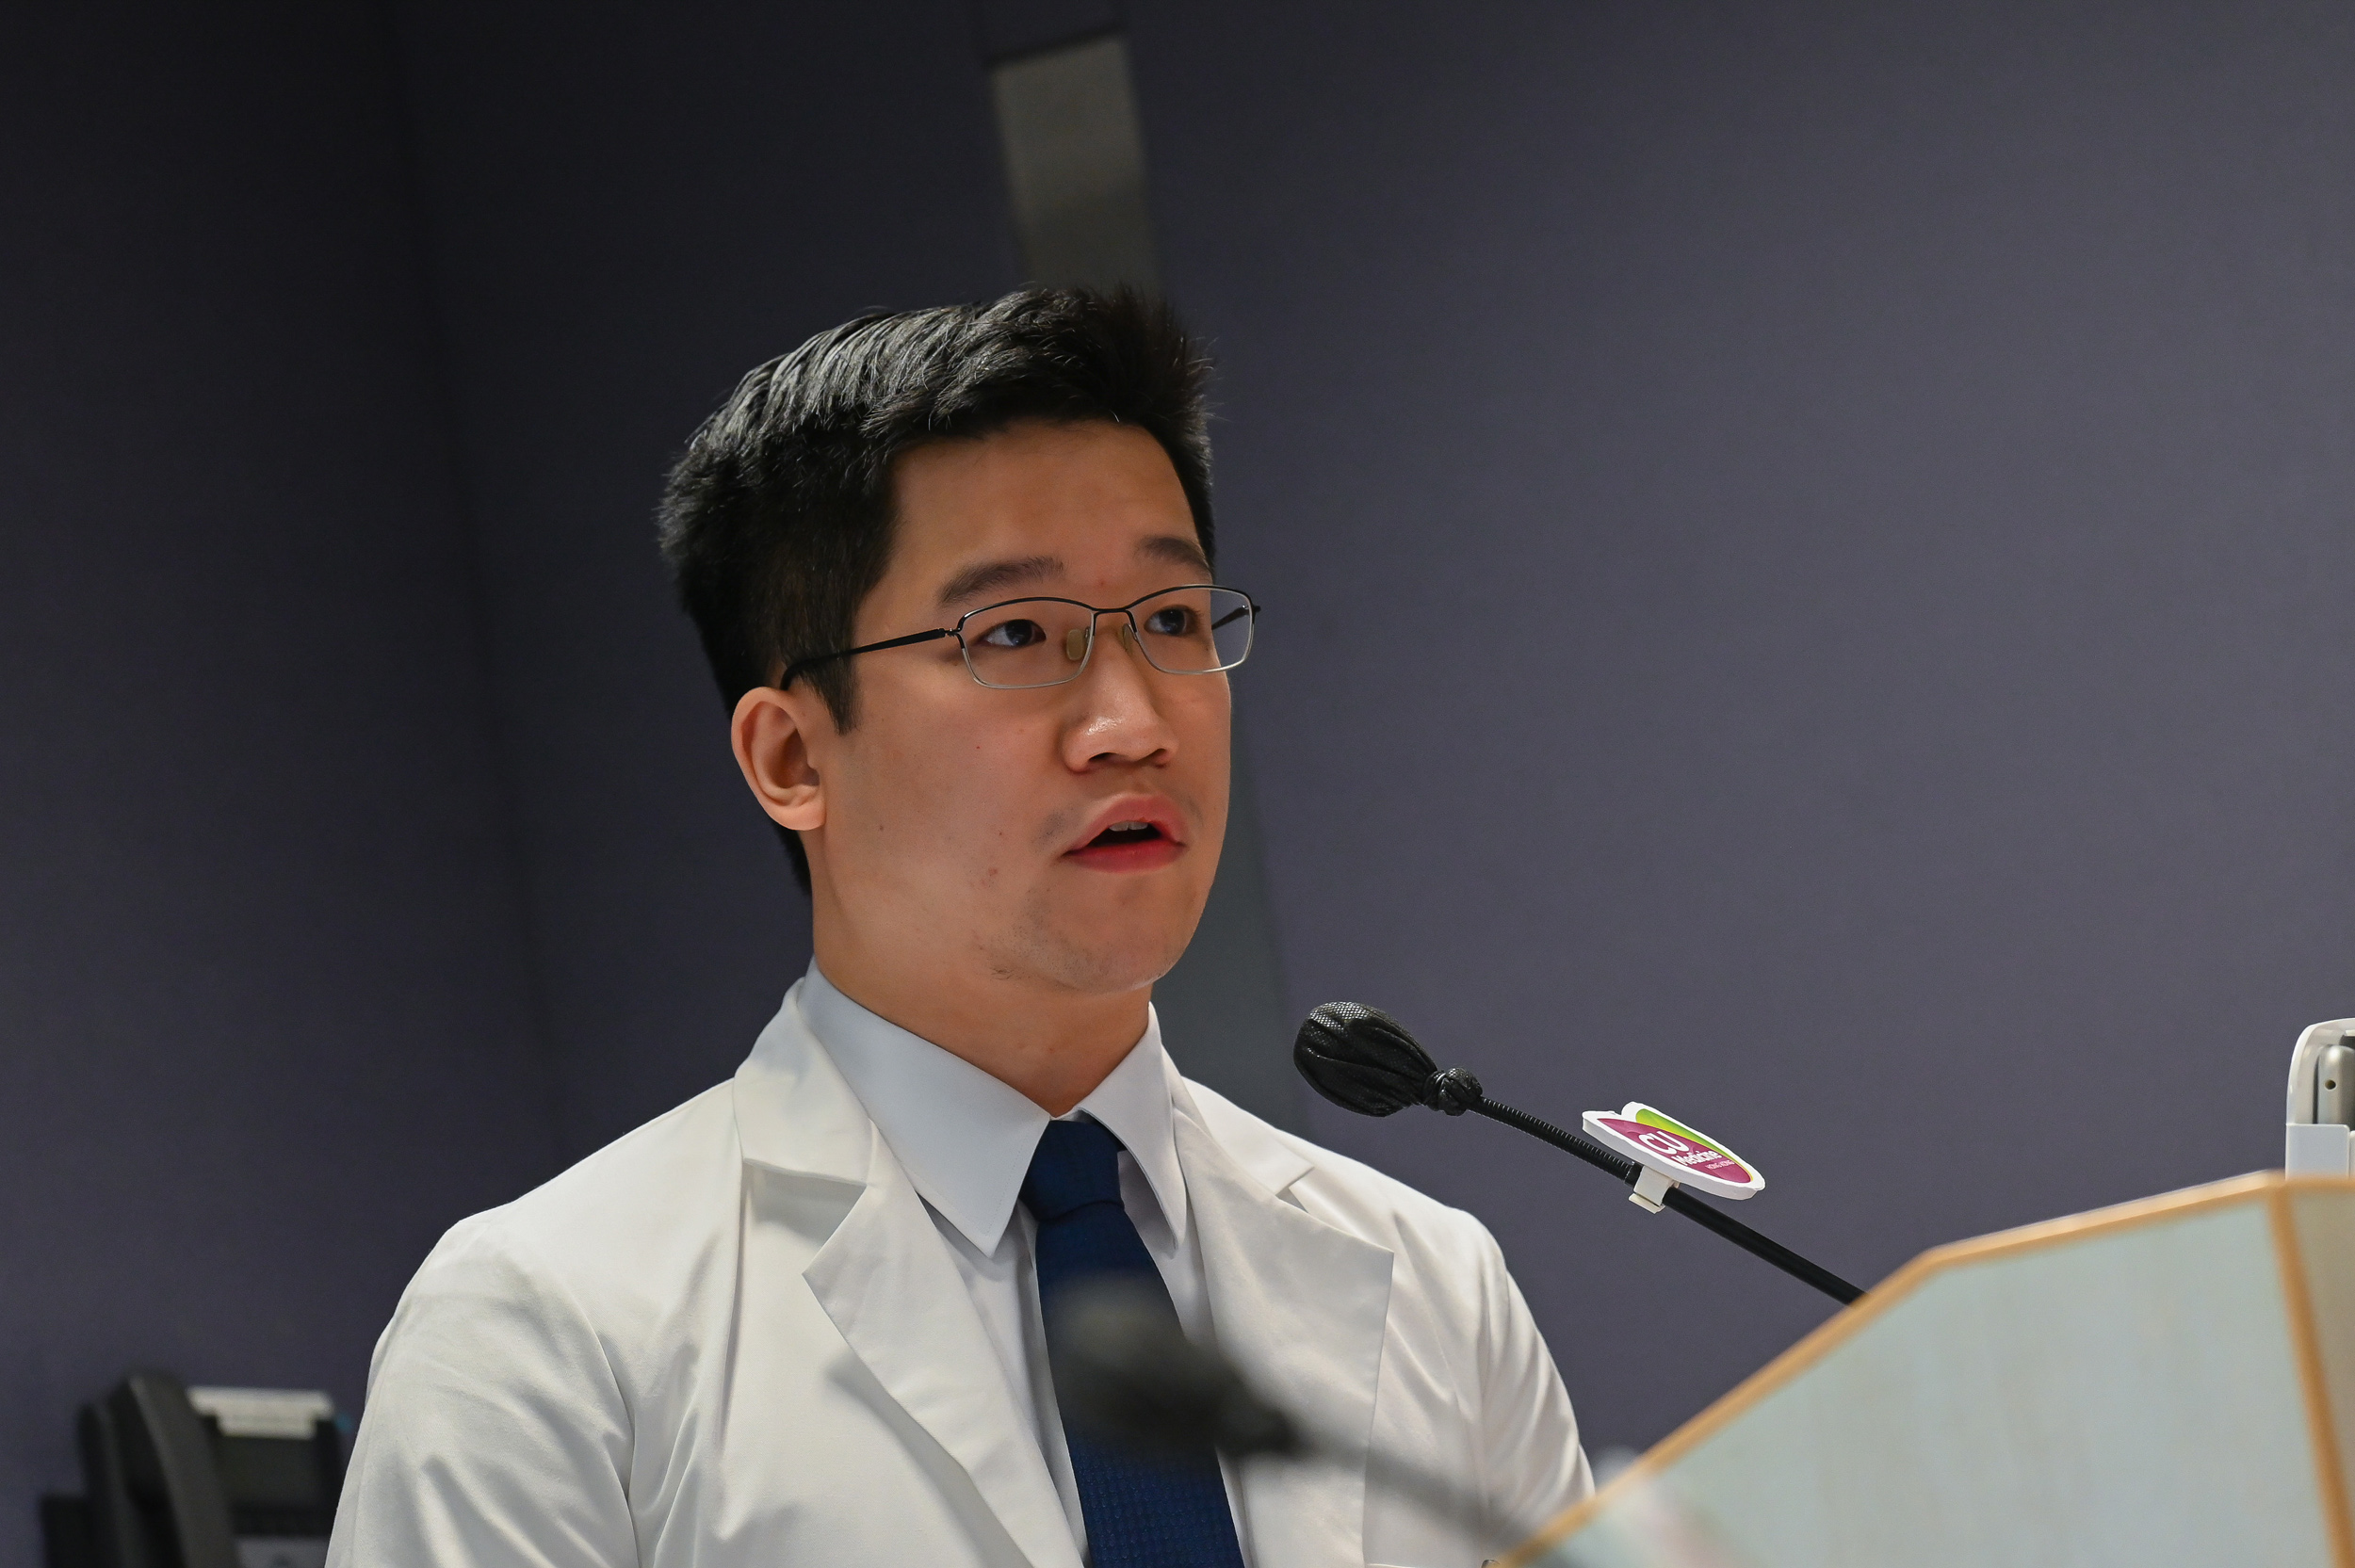 Dr Kevin Lim